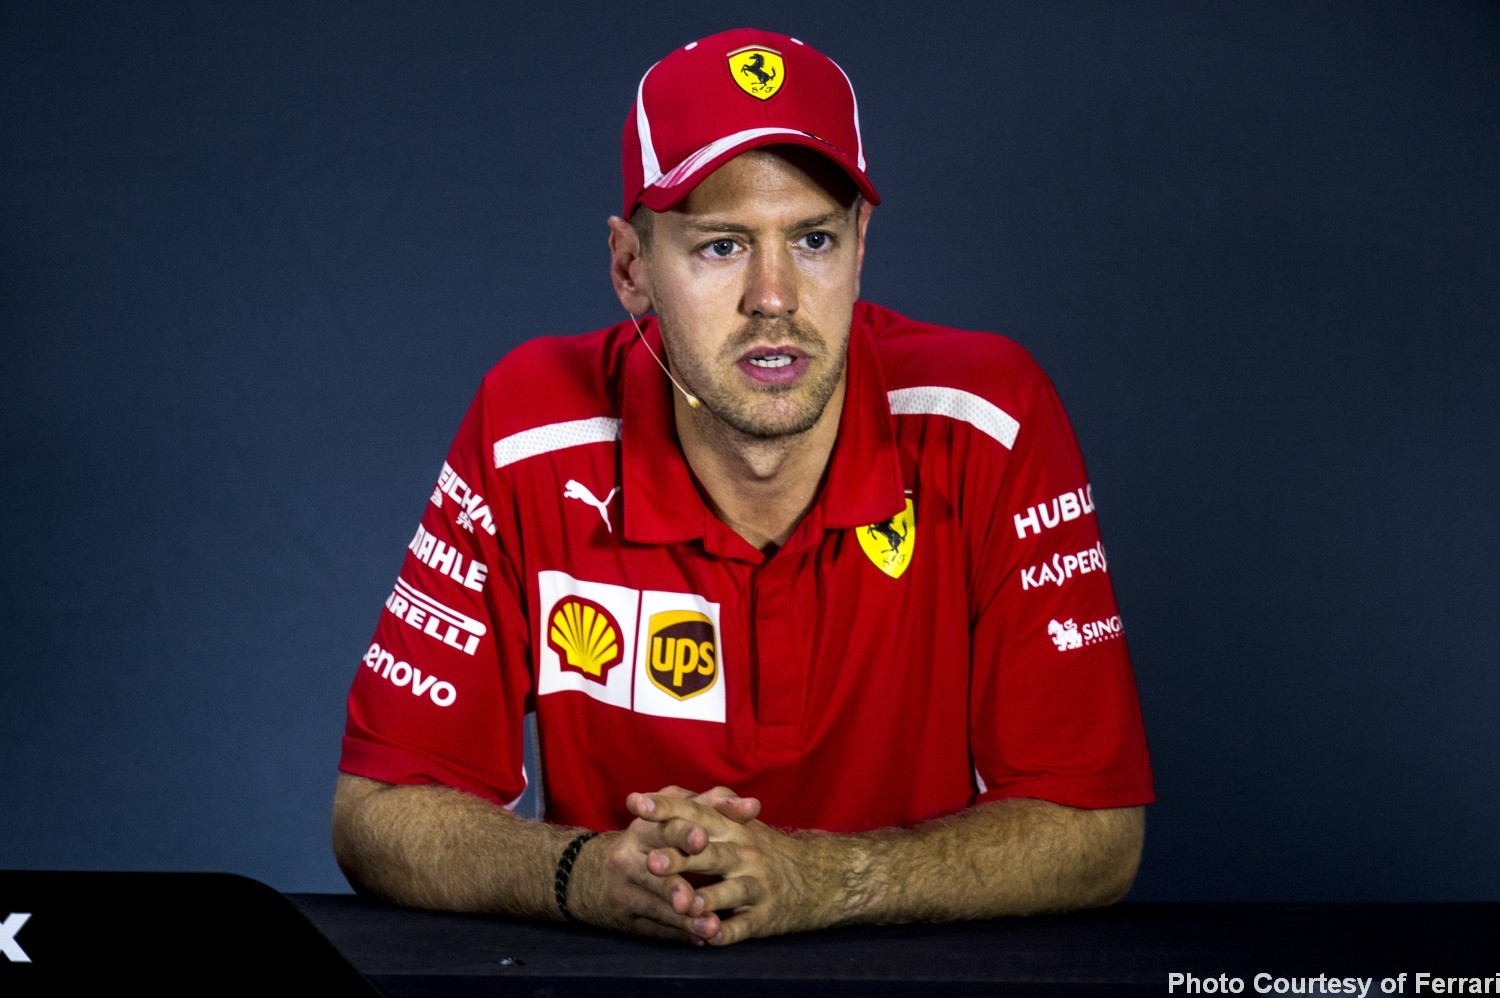 No smile from Vettel on Sunday